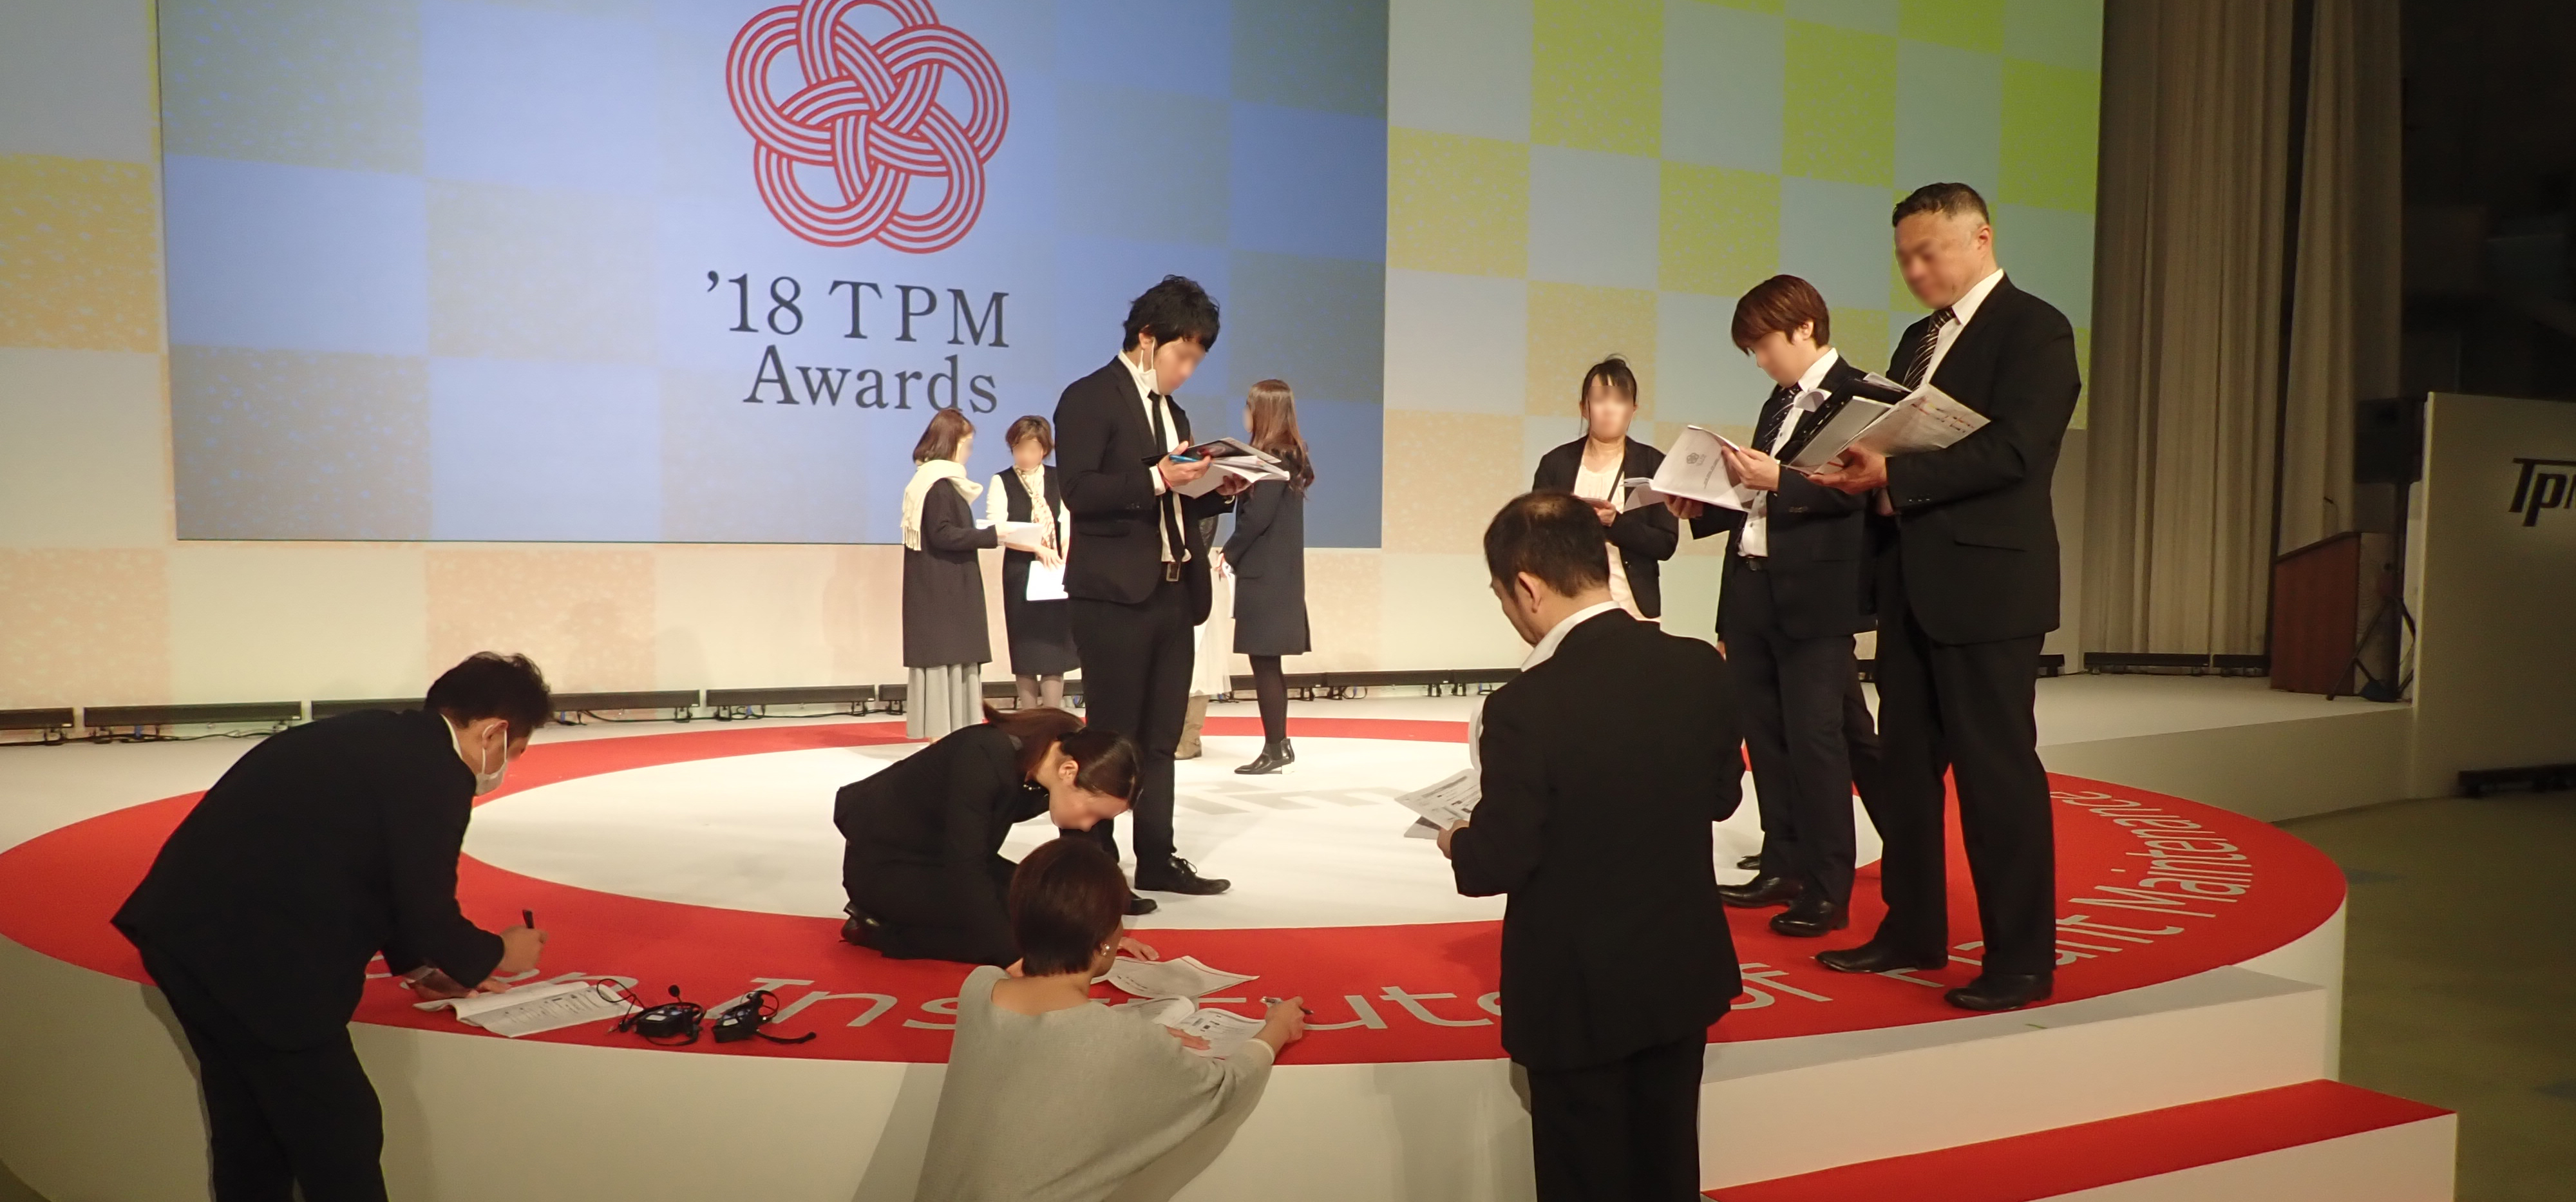 tpm awards stage